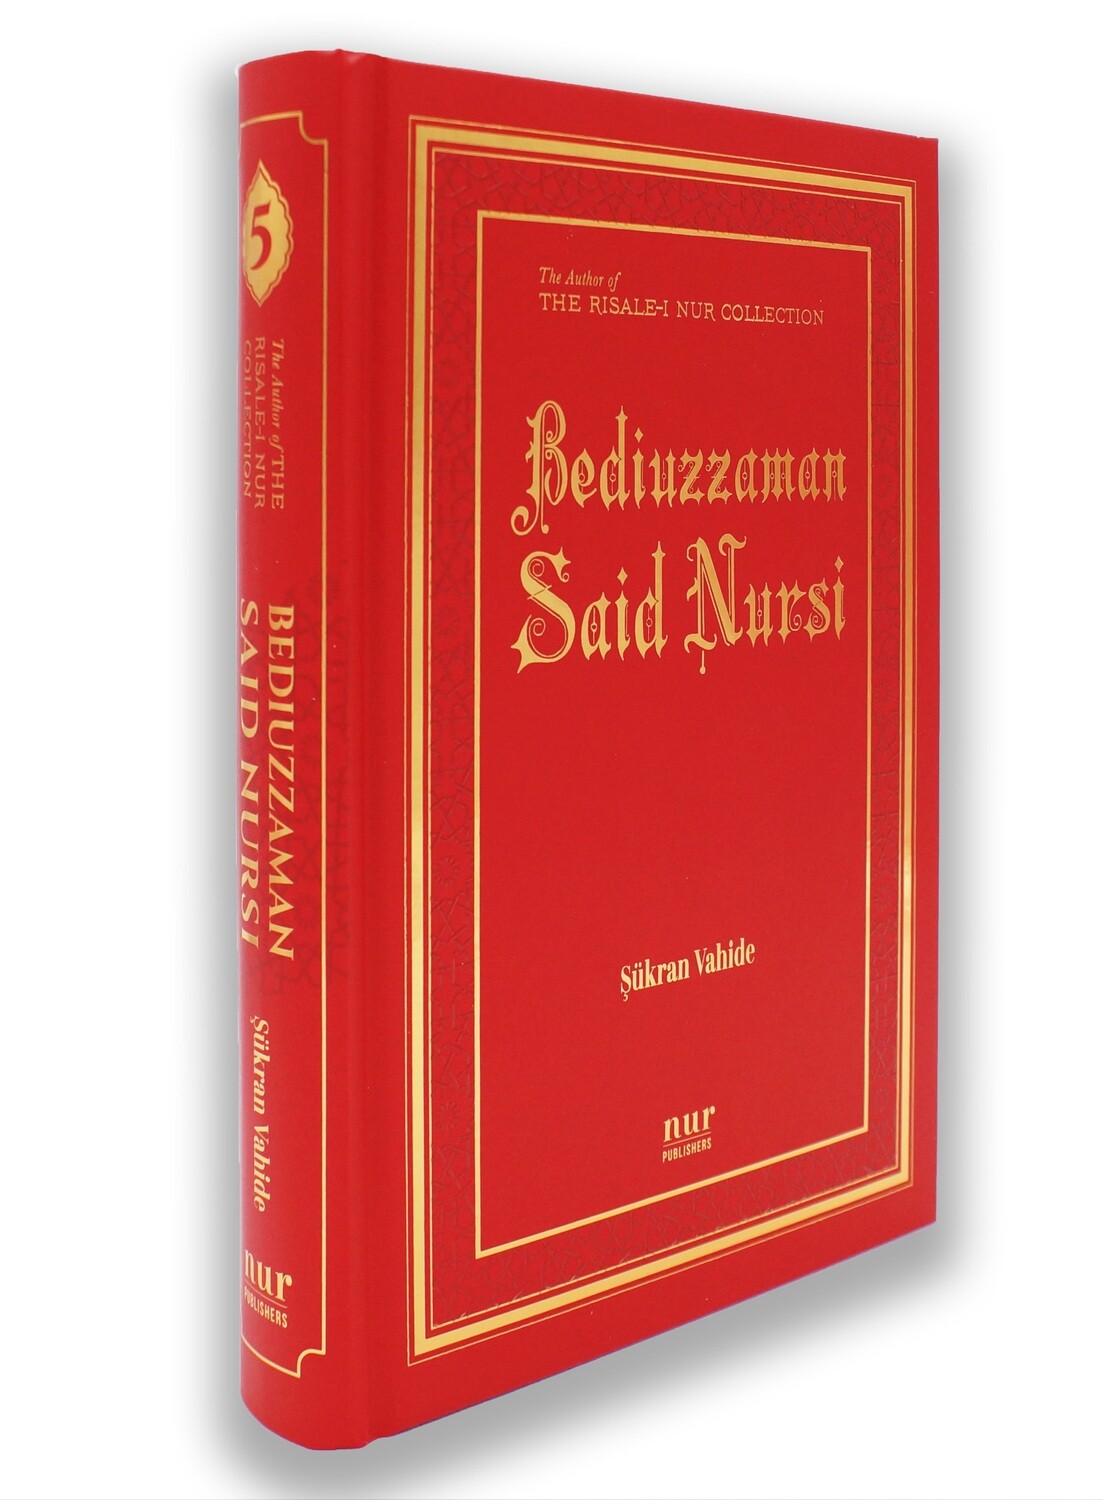 Biography of Bediuzzaman Said Nursi